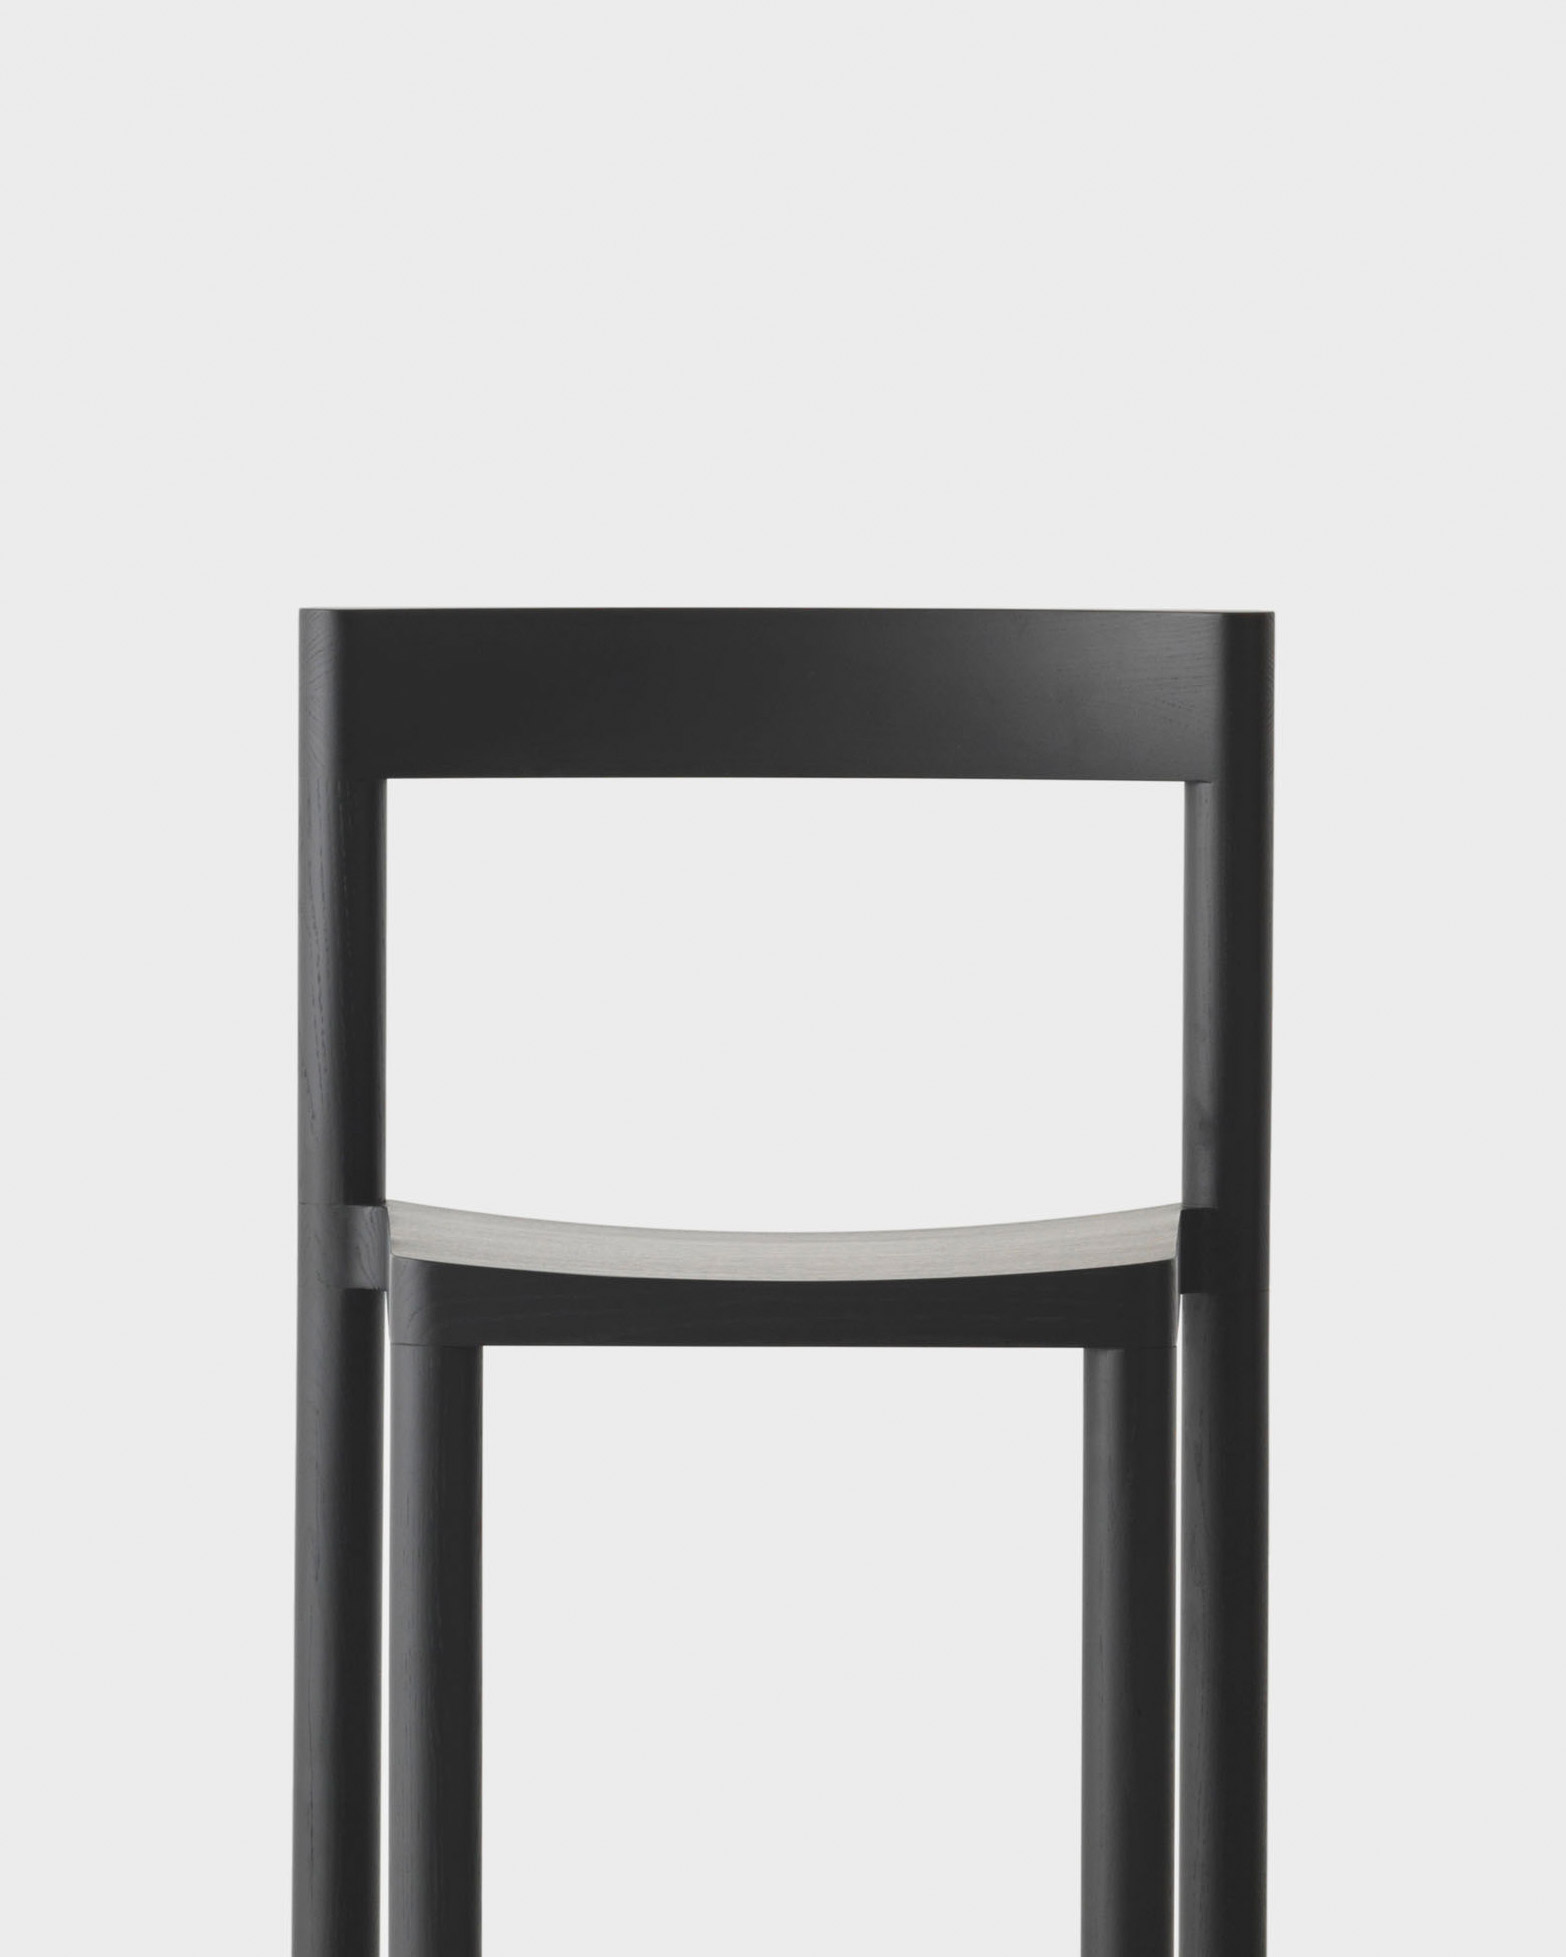 Pier Chair designed by Léonard Kadid for resident - Aesence